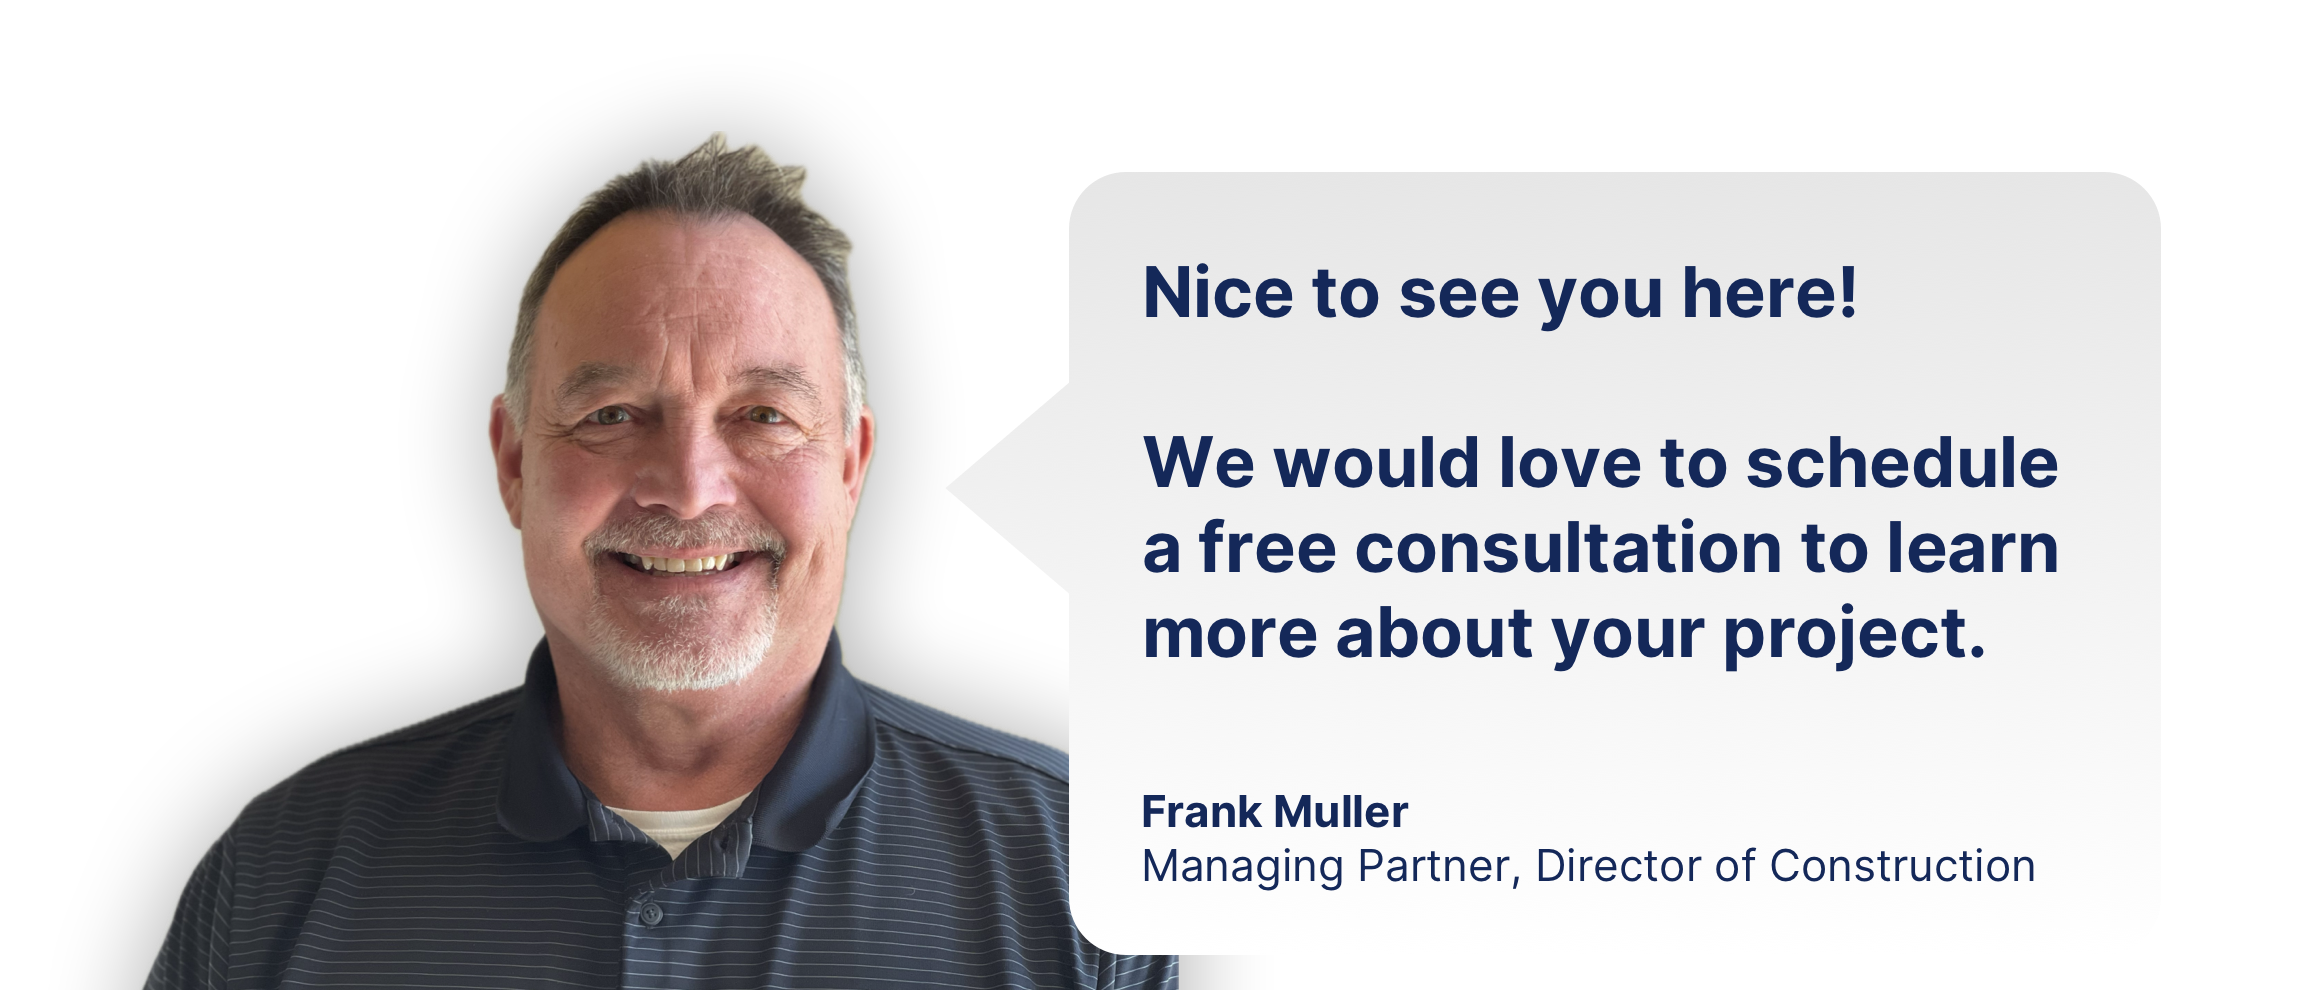 Message from Frank Muller - Managing Partner, Director of Construction